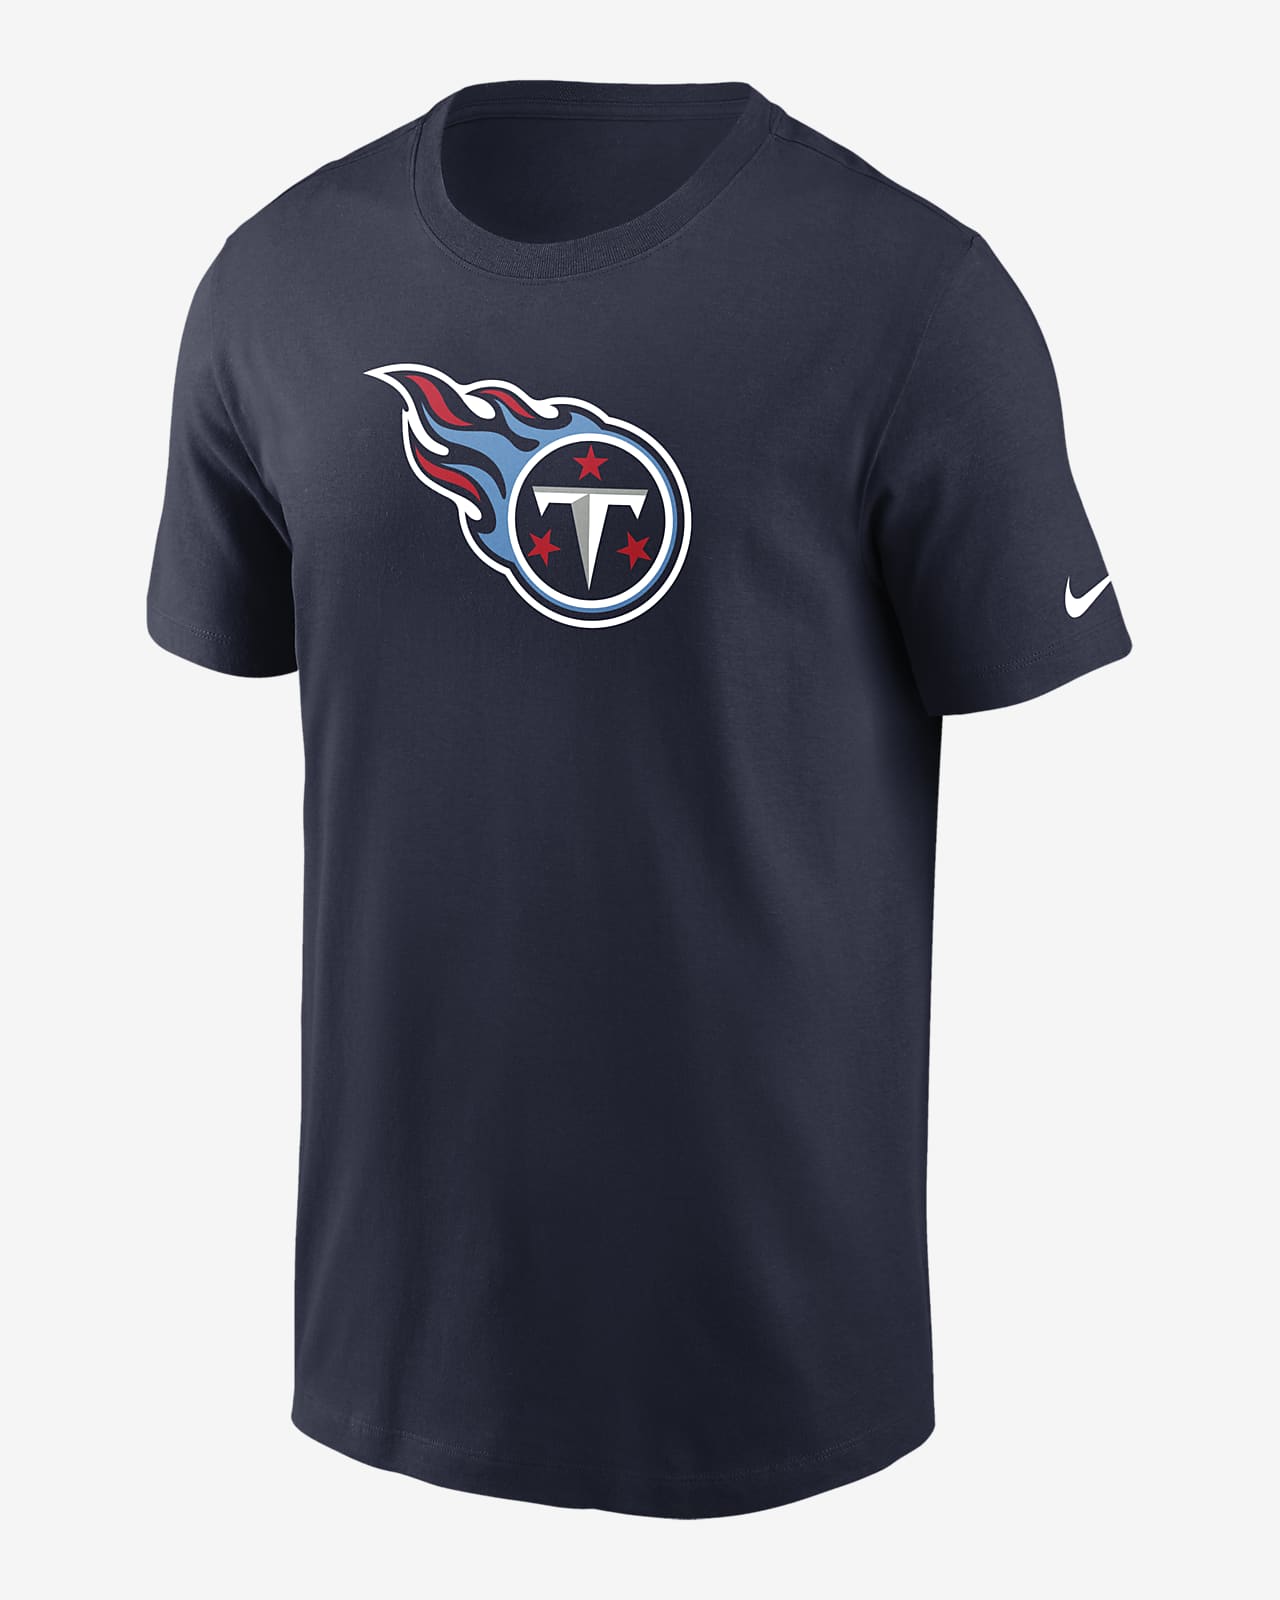 Playera para hombre Nike Logo Essential (NFL Tennessee Titans)